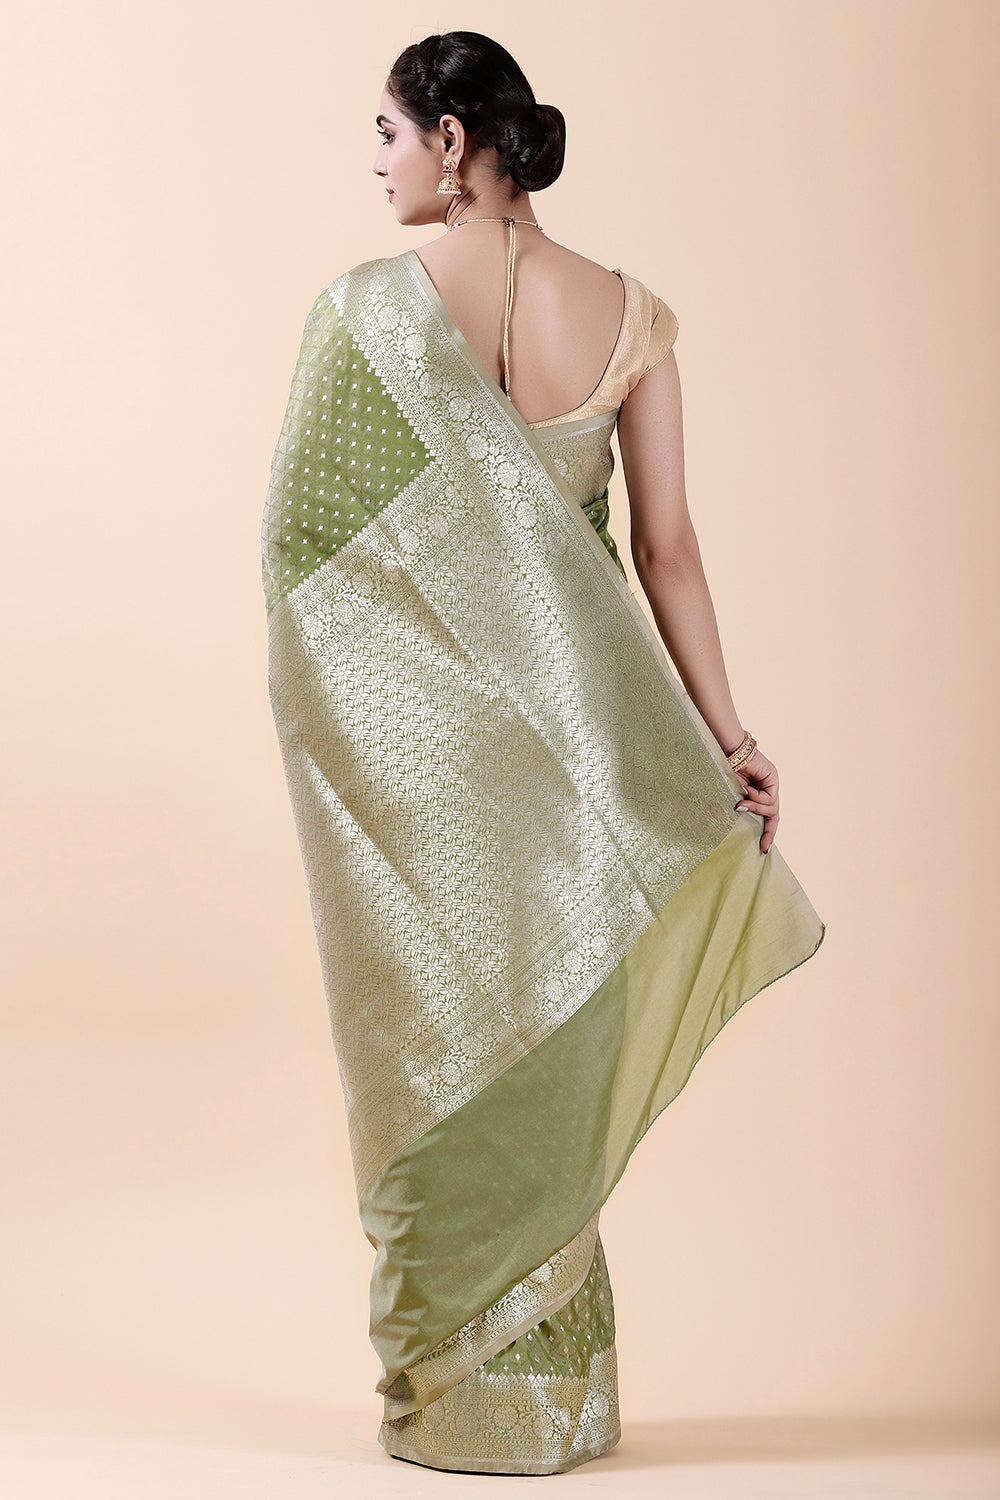 Sage Green Colour Banarsi Silk Weaving Saree.